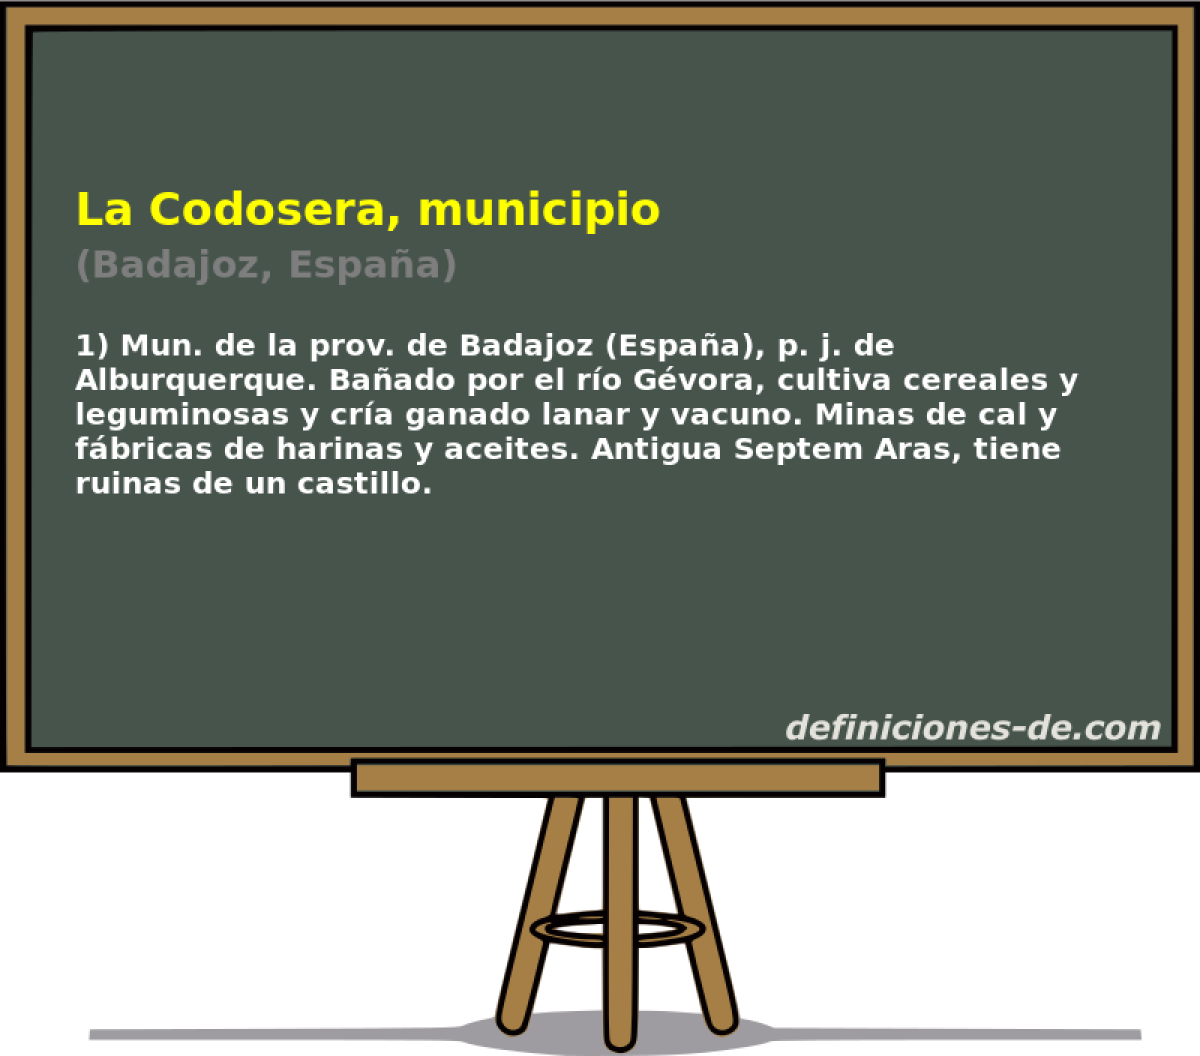 La Codosera, municipio (Badajoz, Espaa)